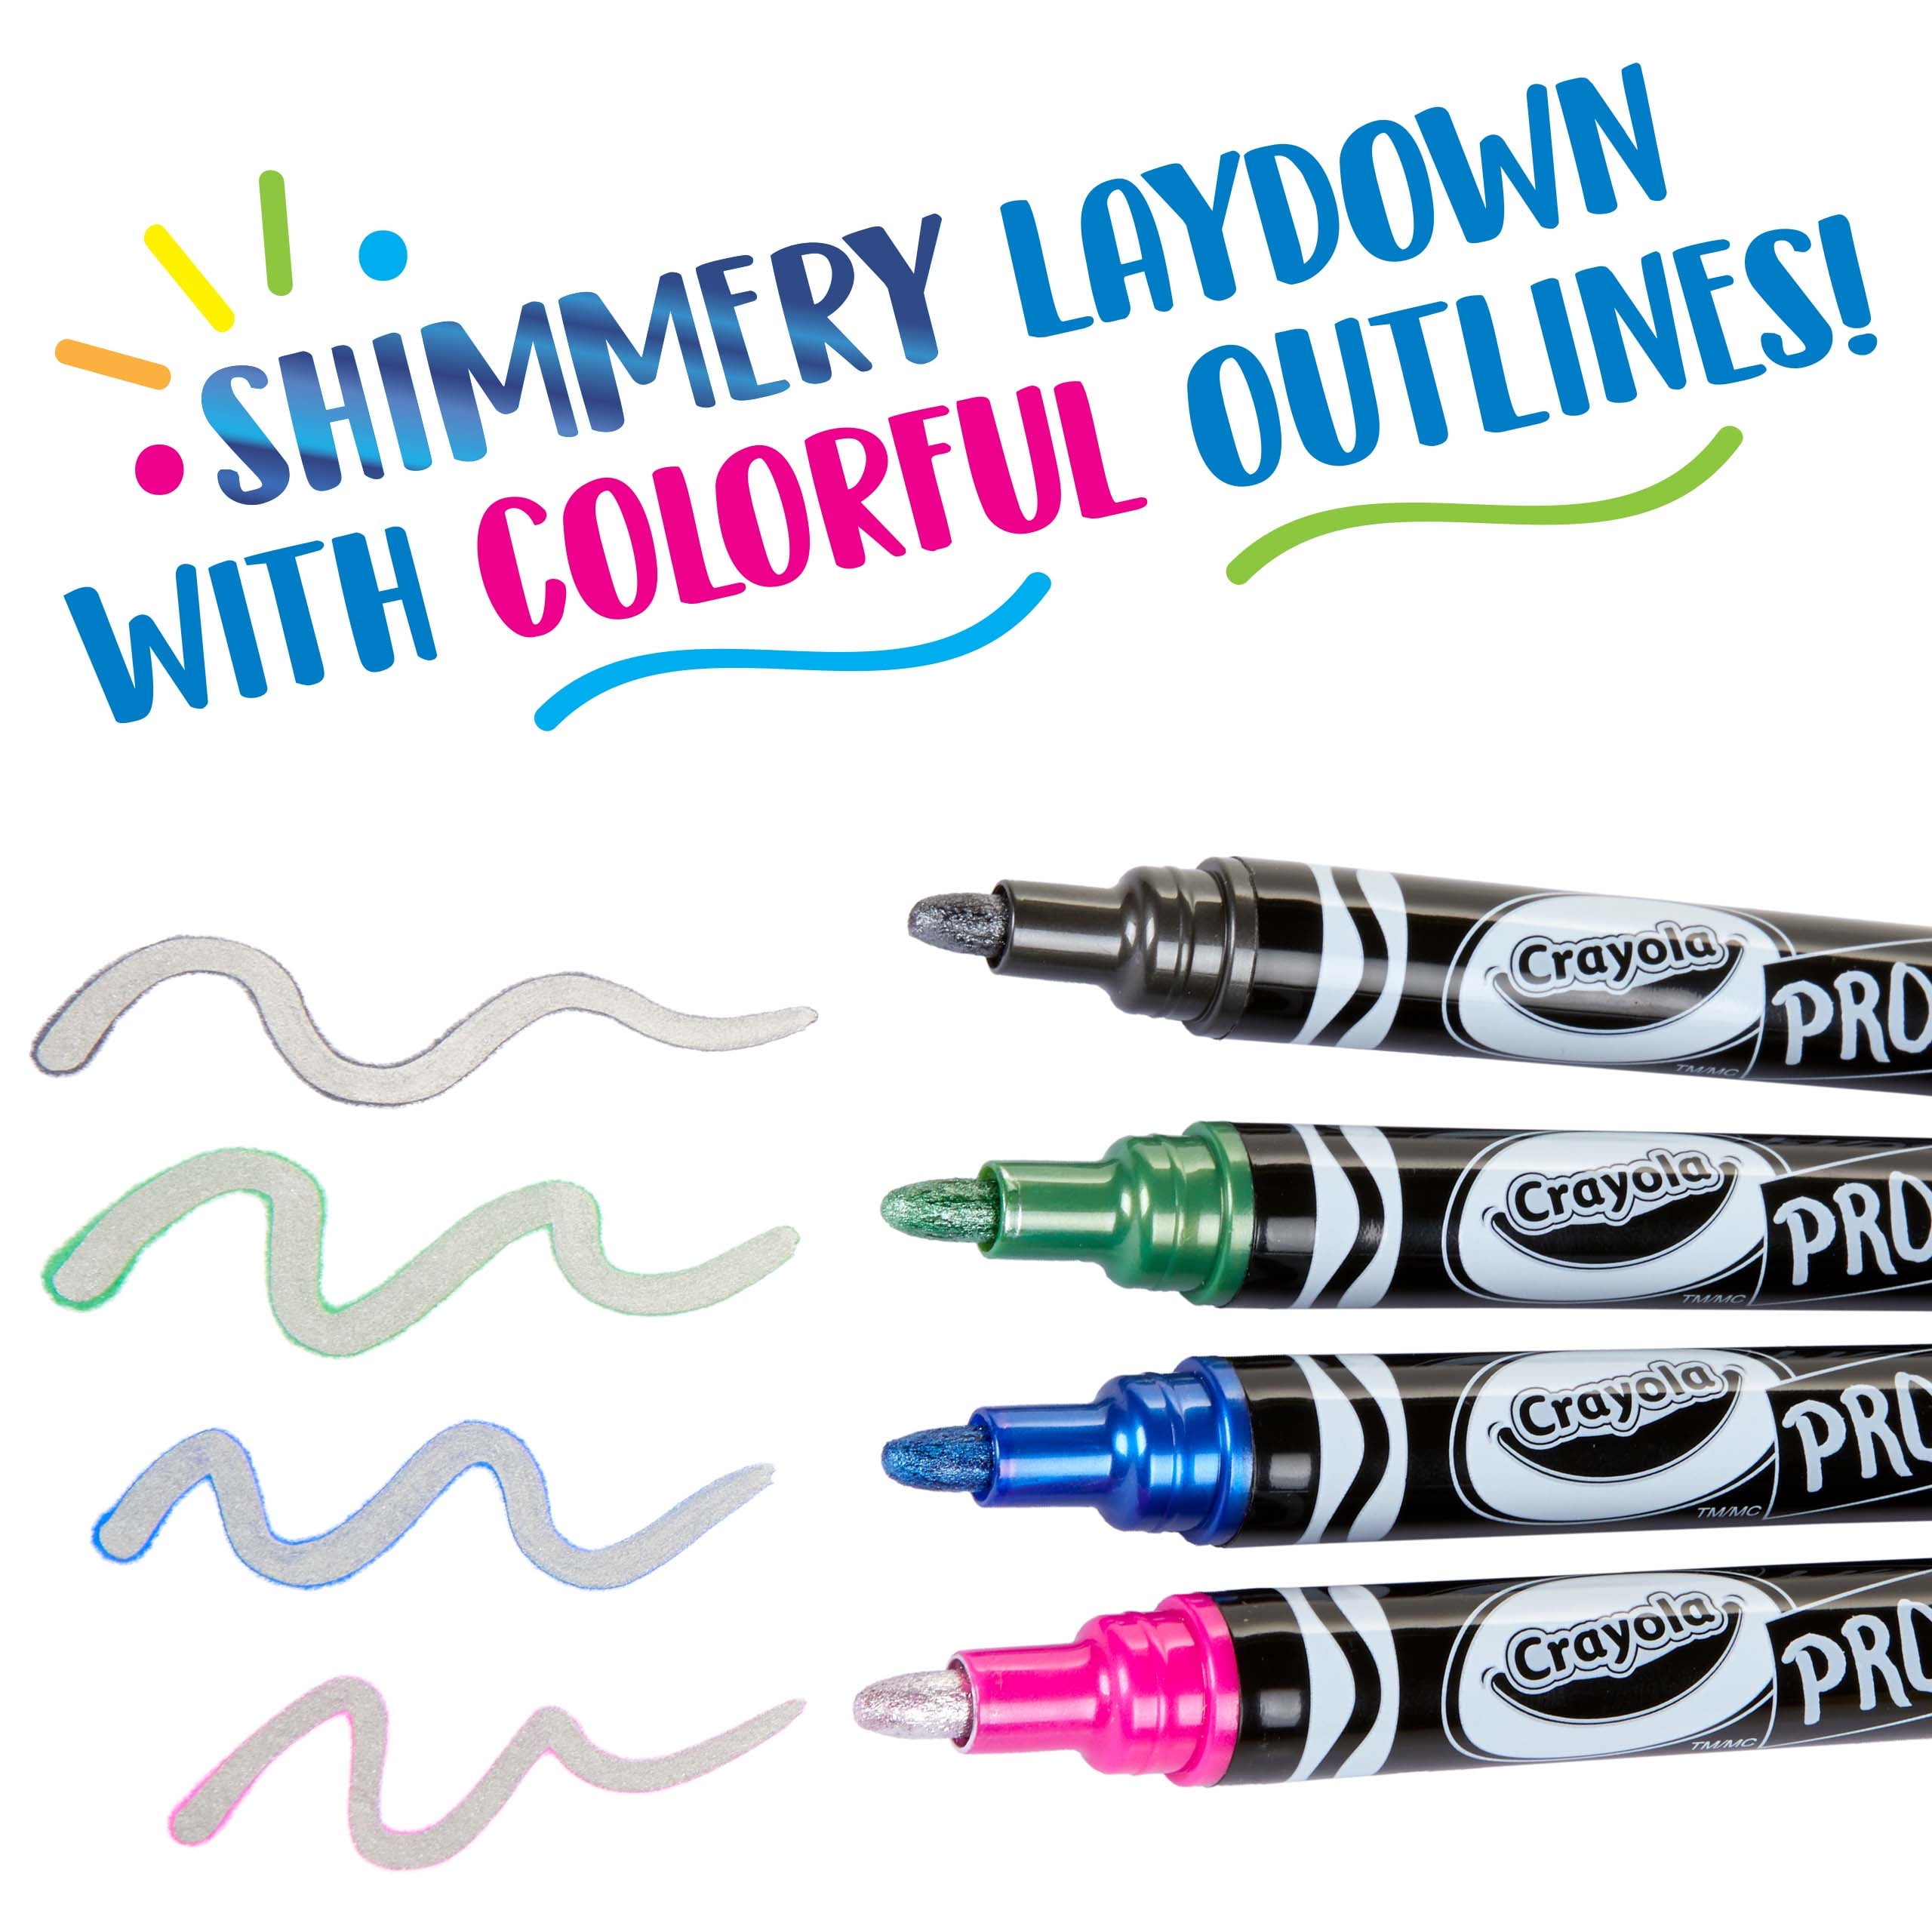 Signature Metallic Outline Paint Marker Set, Crayola.com